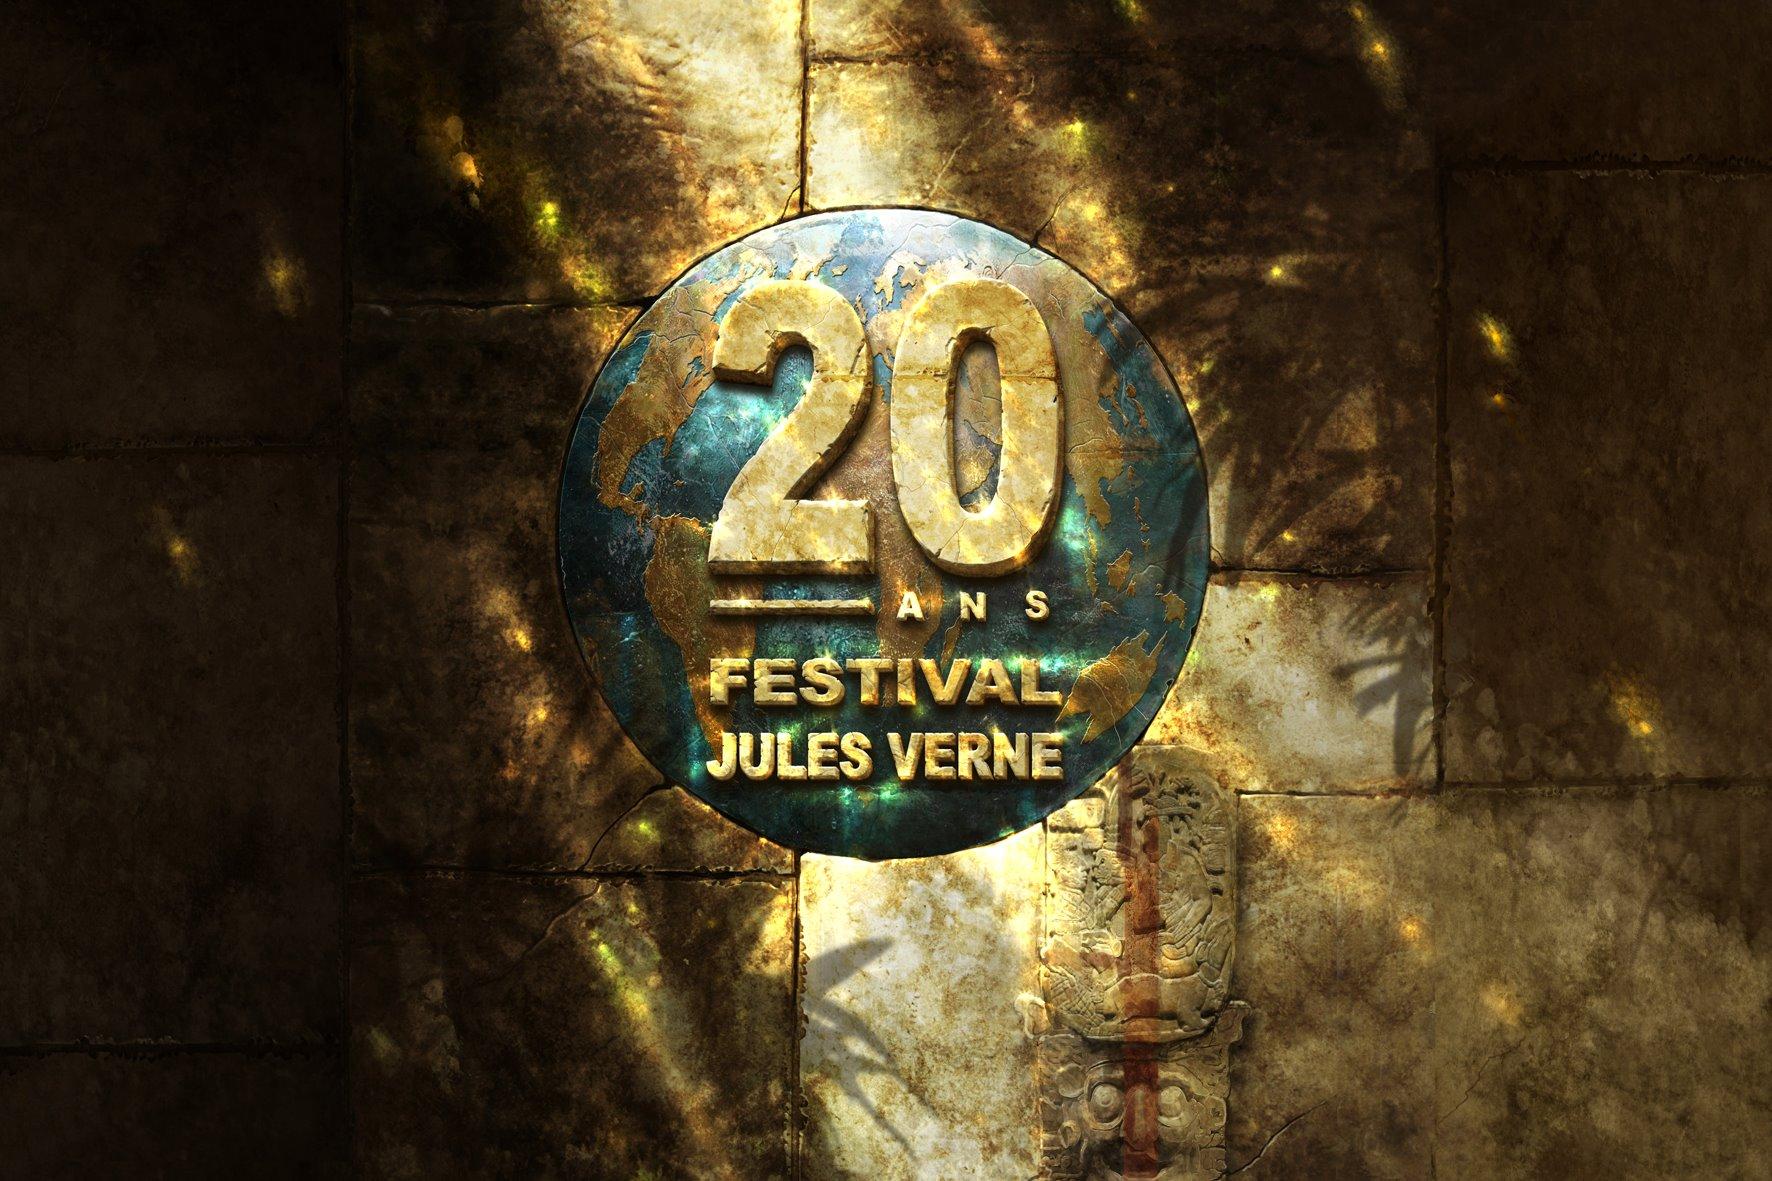 Festival Jules Verne souffle ses 20 bougies